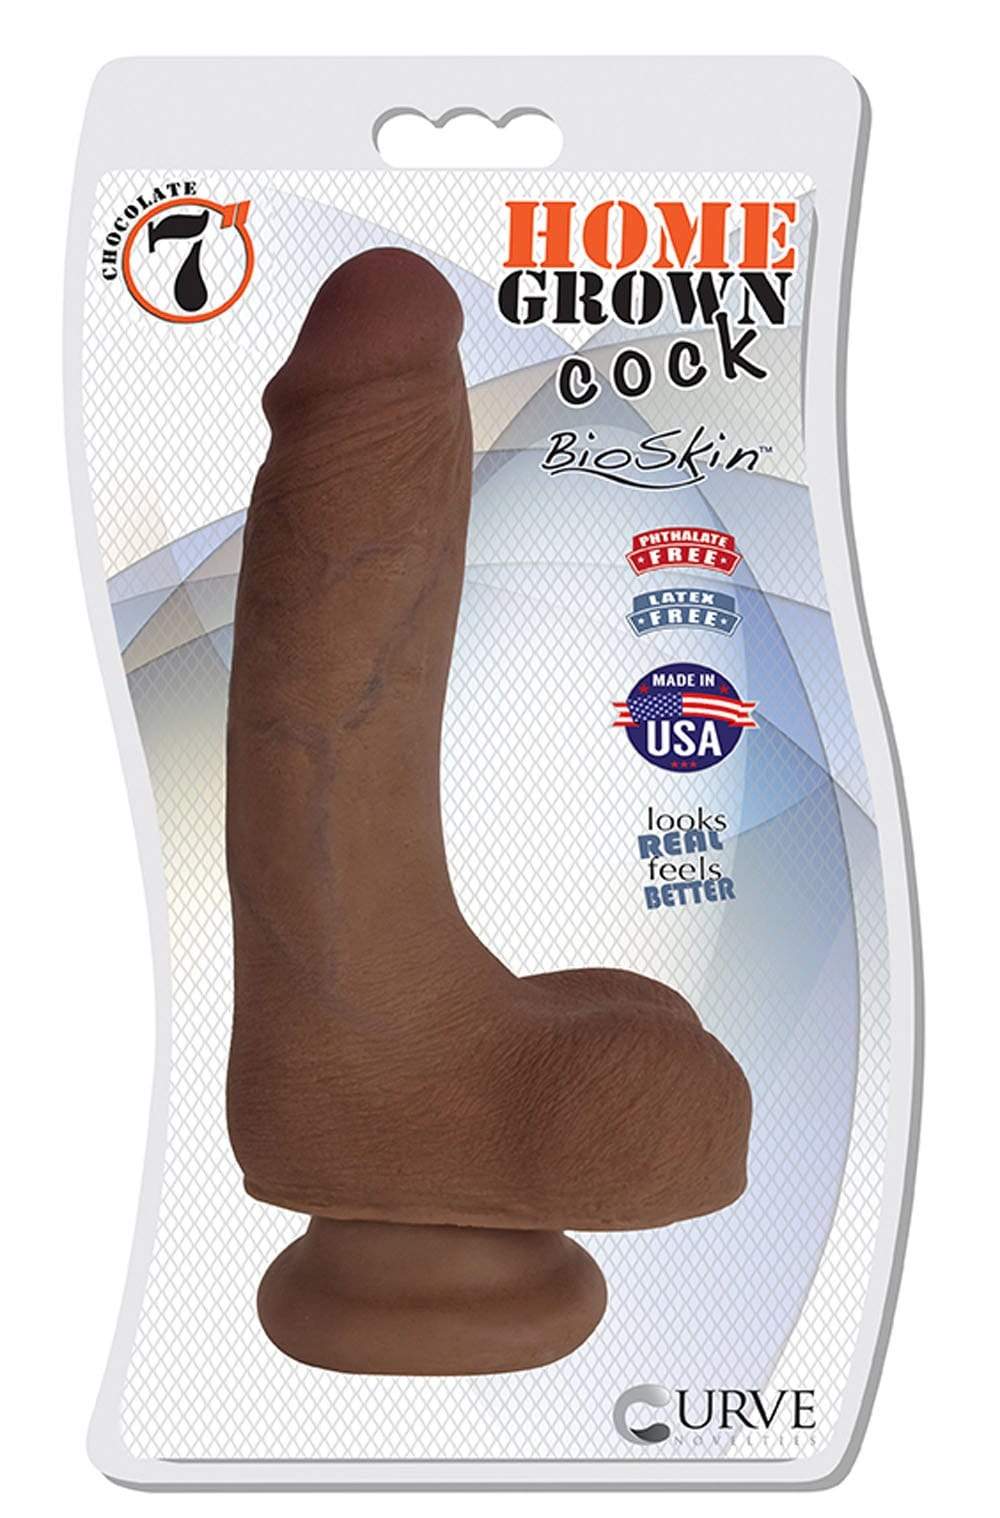 7 home grown cock chocolate